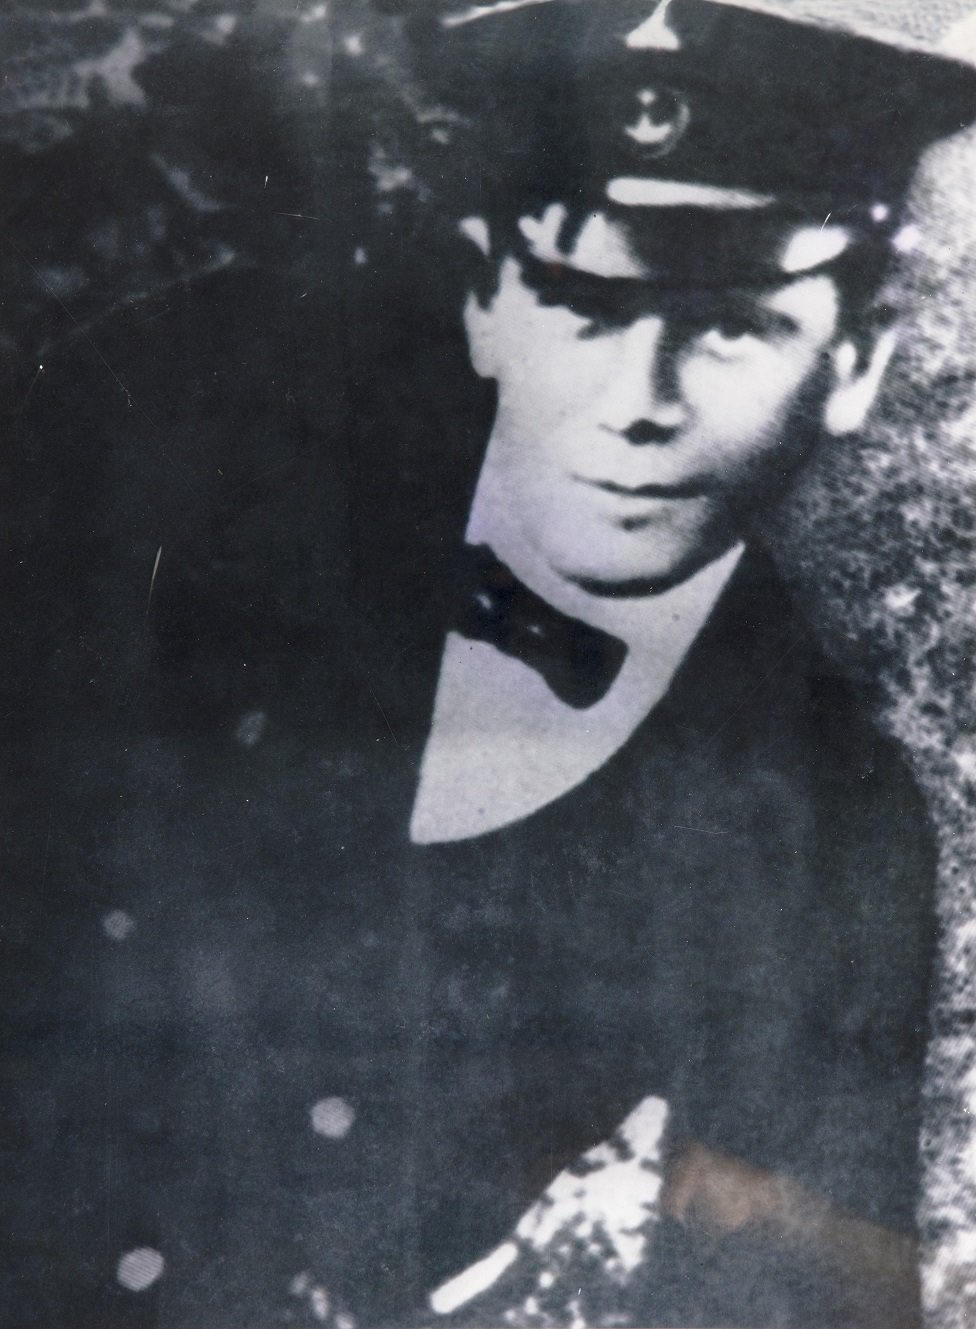 František Raš rođen u Prerovu u Moravskoj 9. 12. 1889. narednik vodnik brodske struke, streljan kao vođa pobune